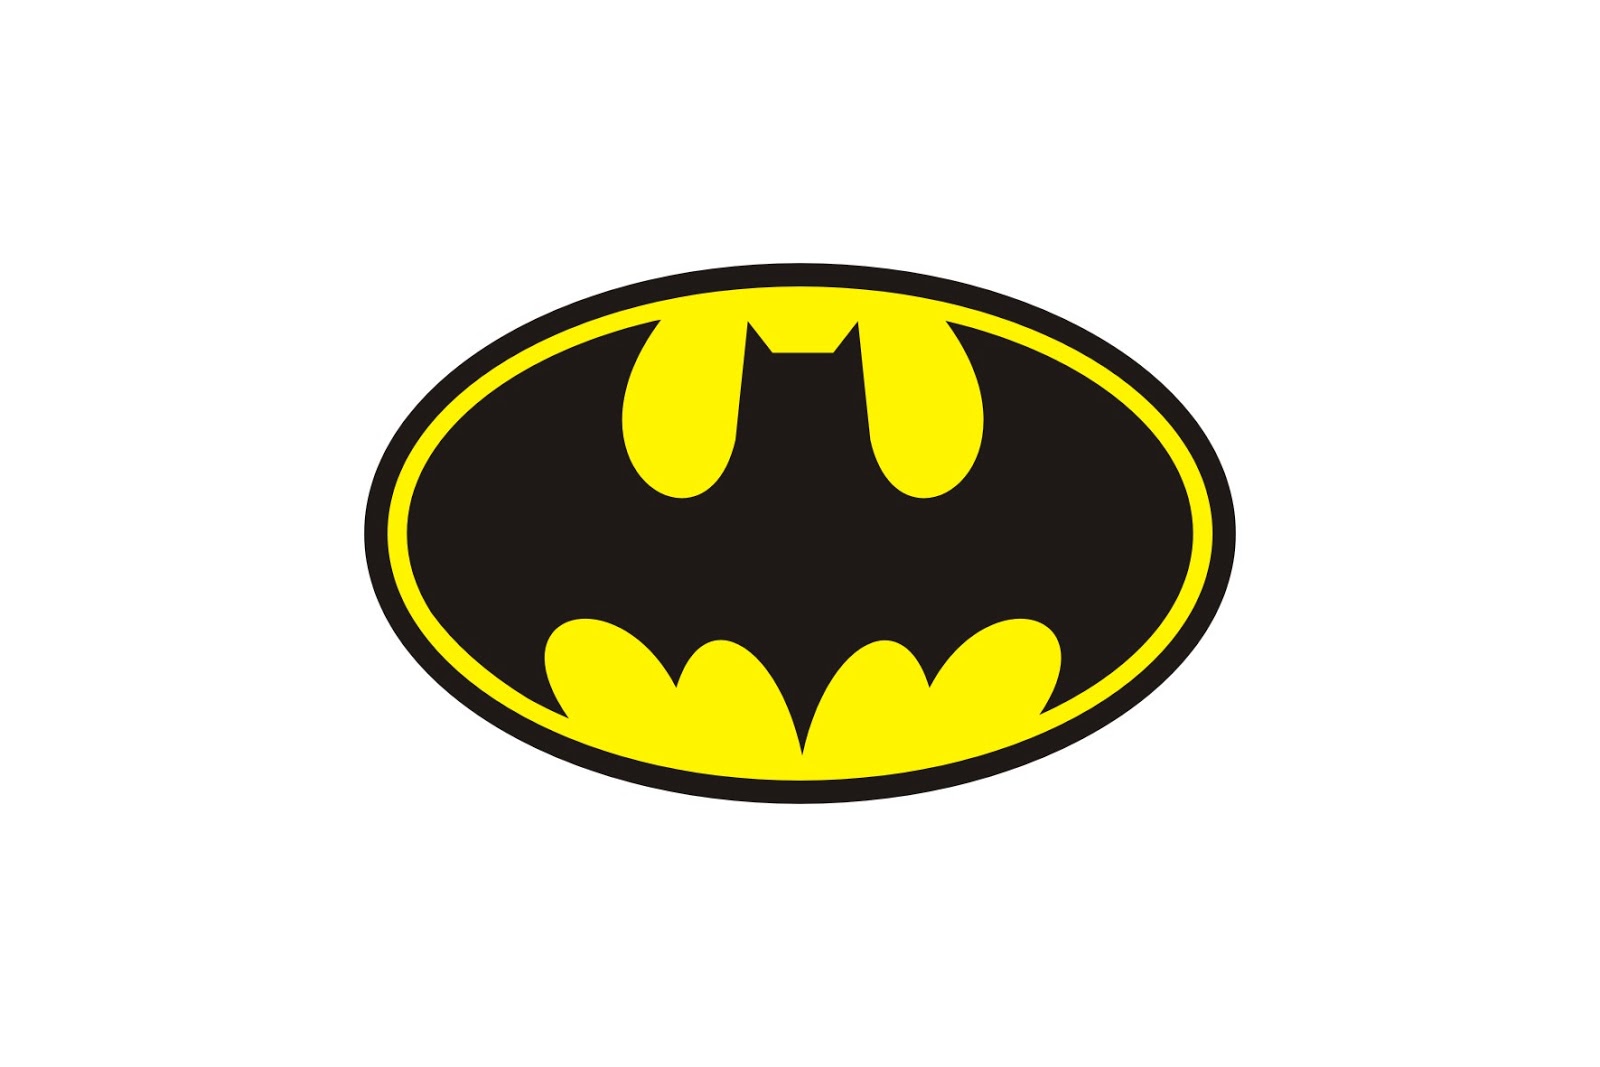 Free Printable Batman Logo - Get Your Own Batman Logo Now!